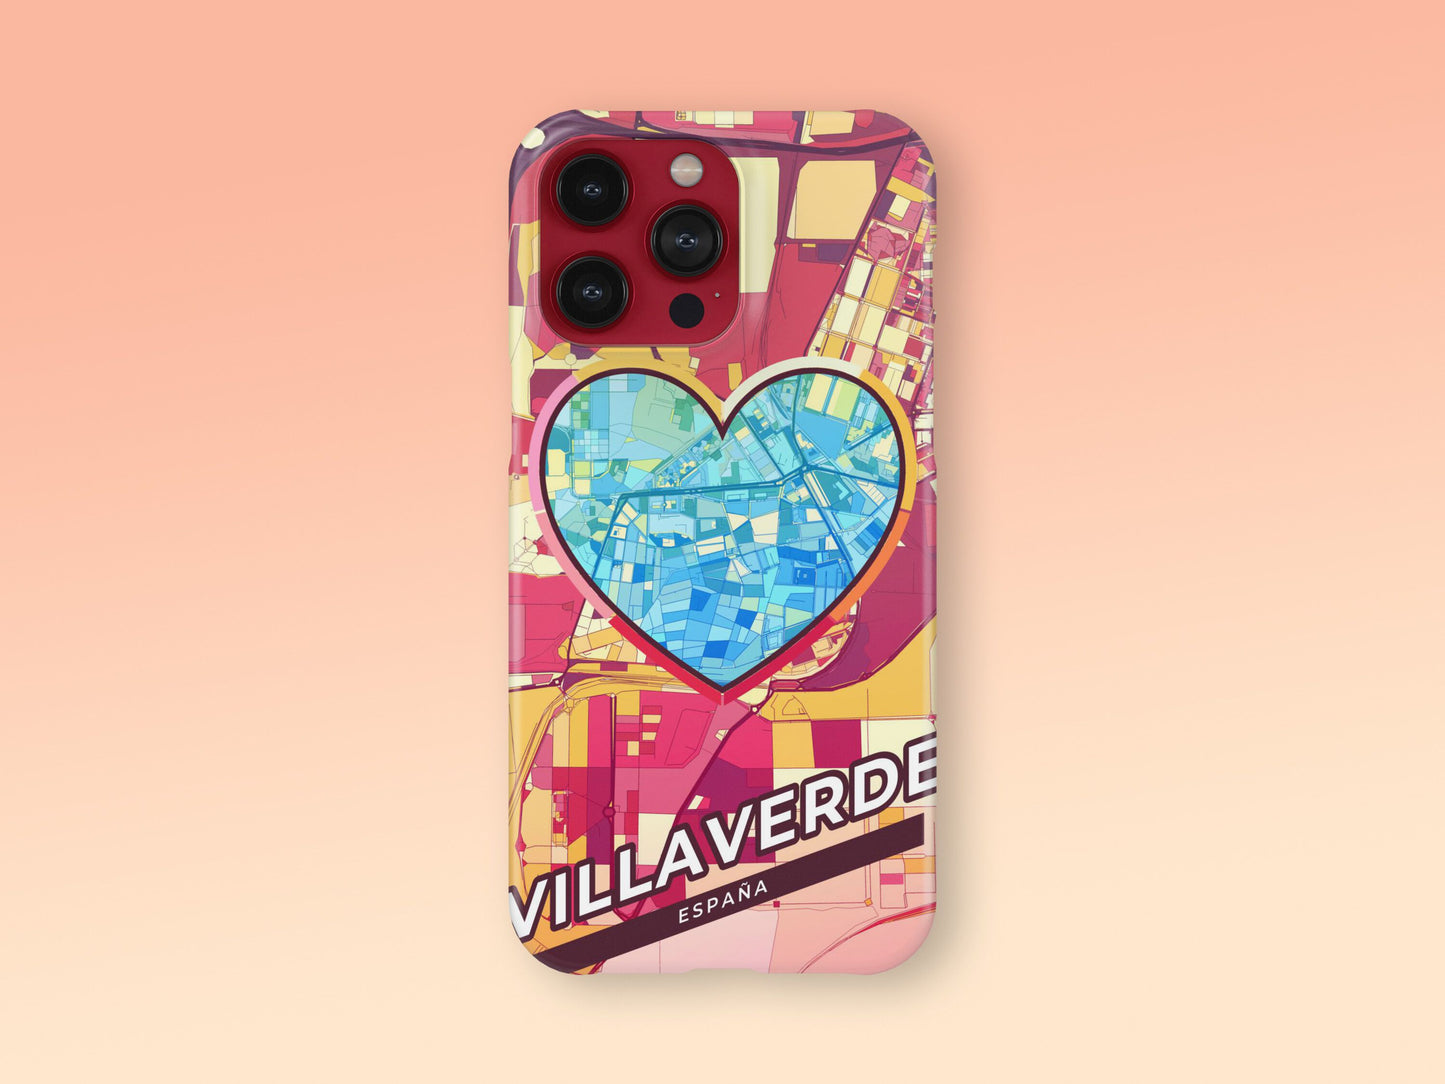 Villaverde Spain slim phone case with colorful icon 2